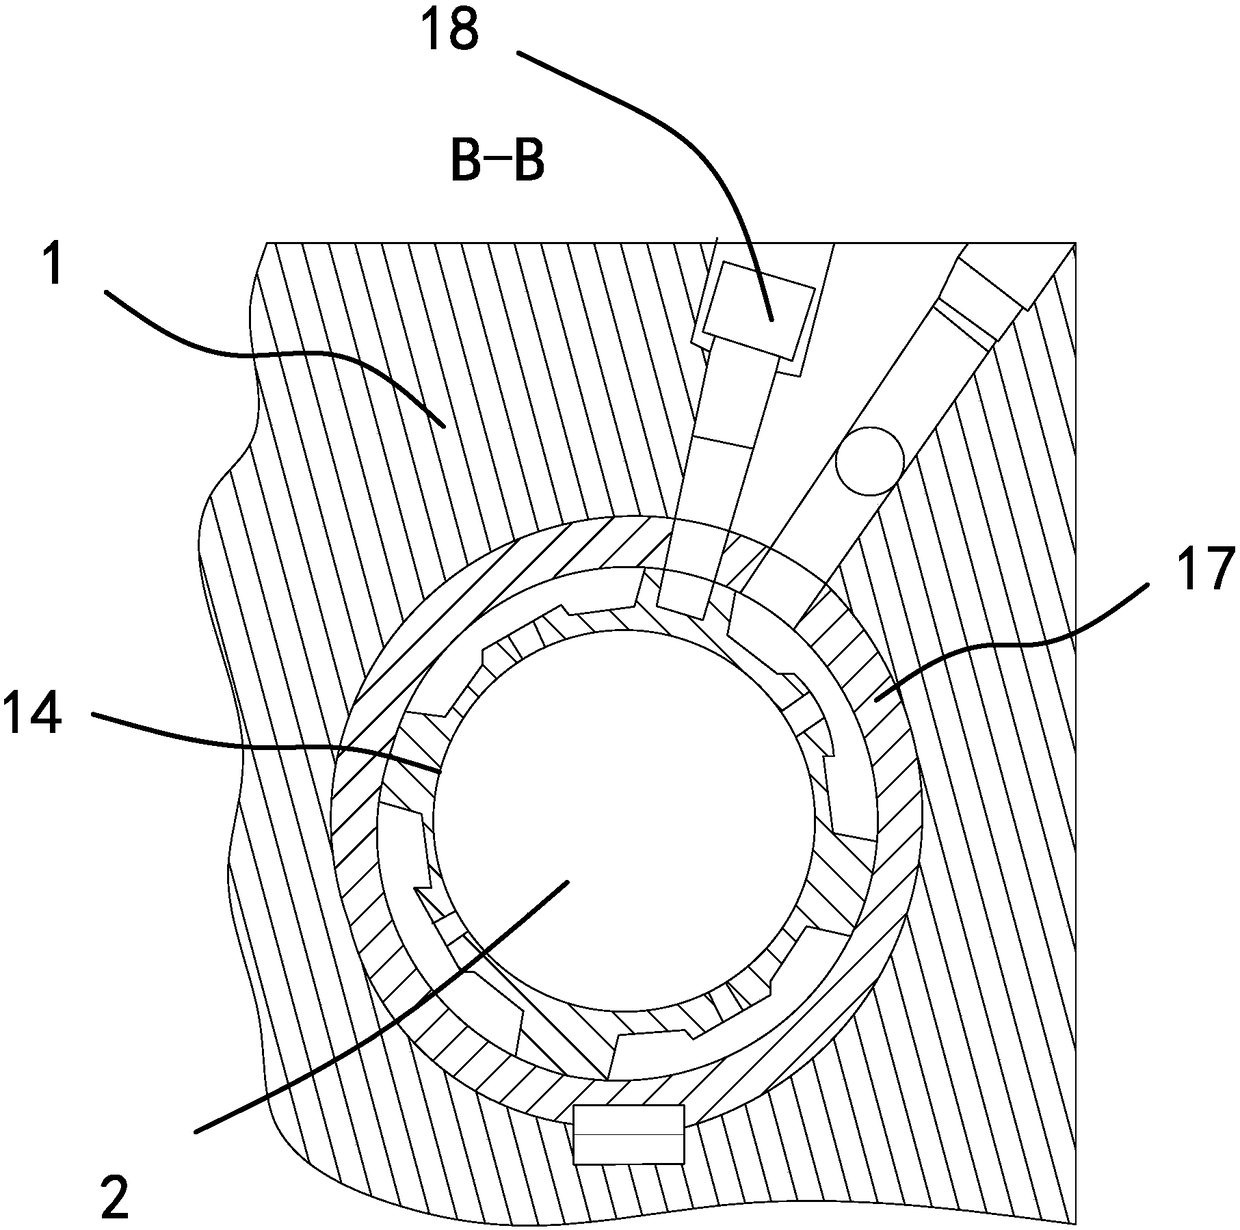 Spindle structure on precision grinder